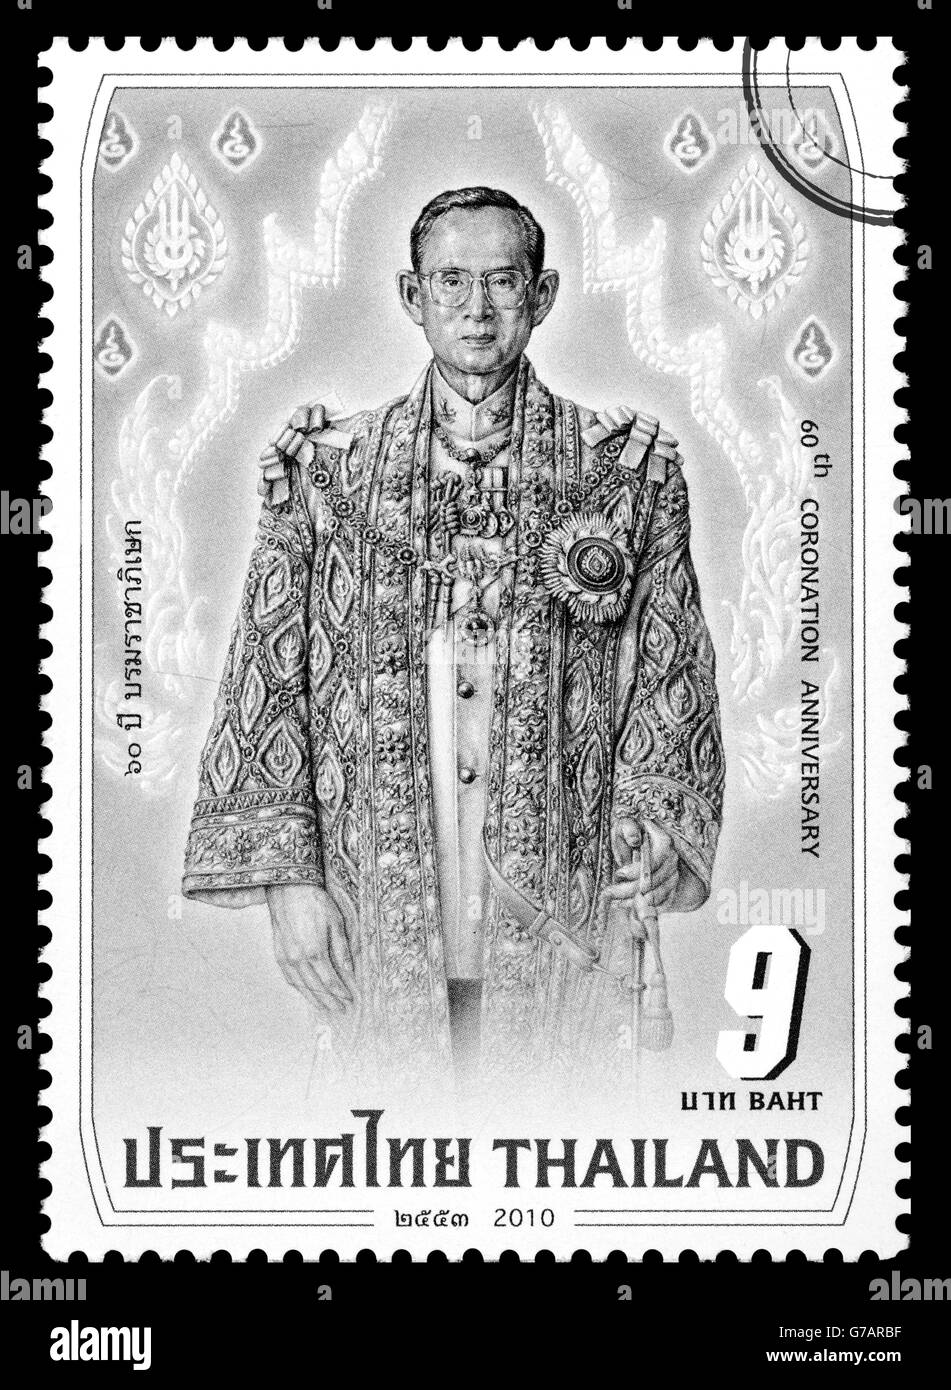 A Postage Stamp Of His Majesty King Bhumibol Adulyadej Of Thailand Celebrating The 60th Coronation Anniversary. Stock Photo